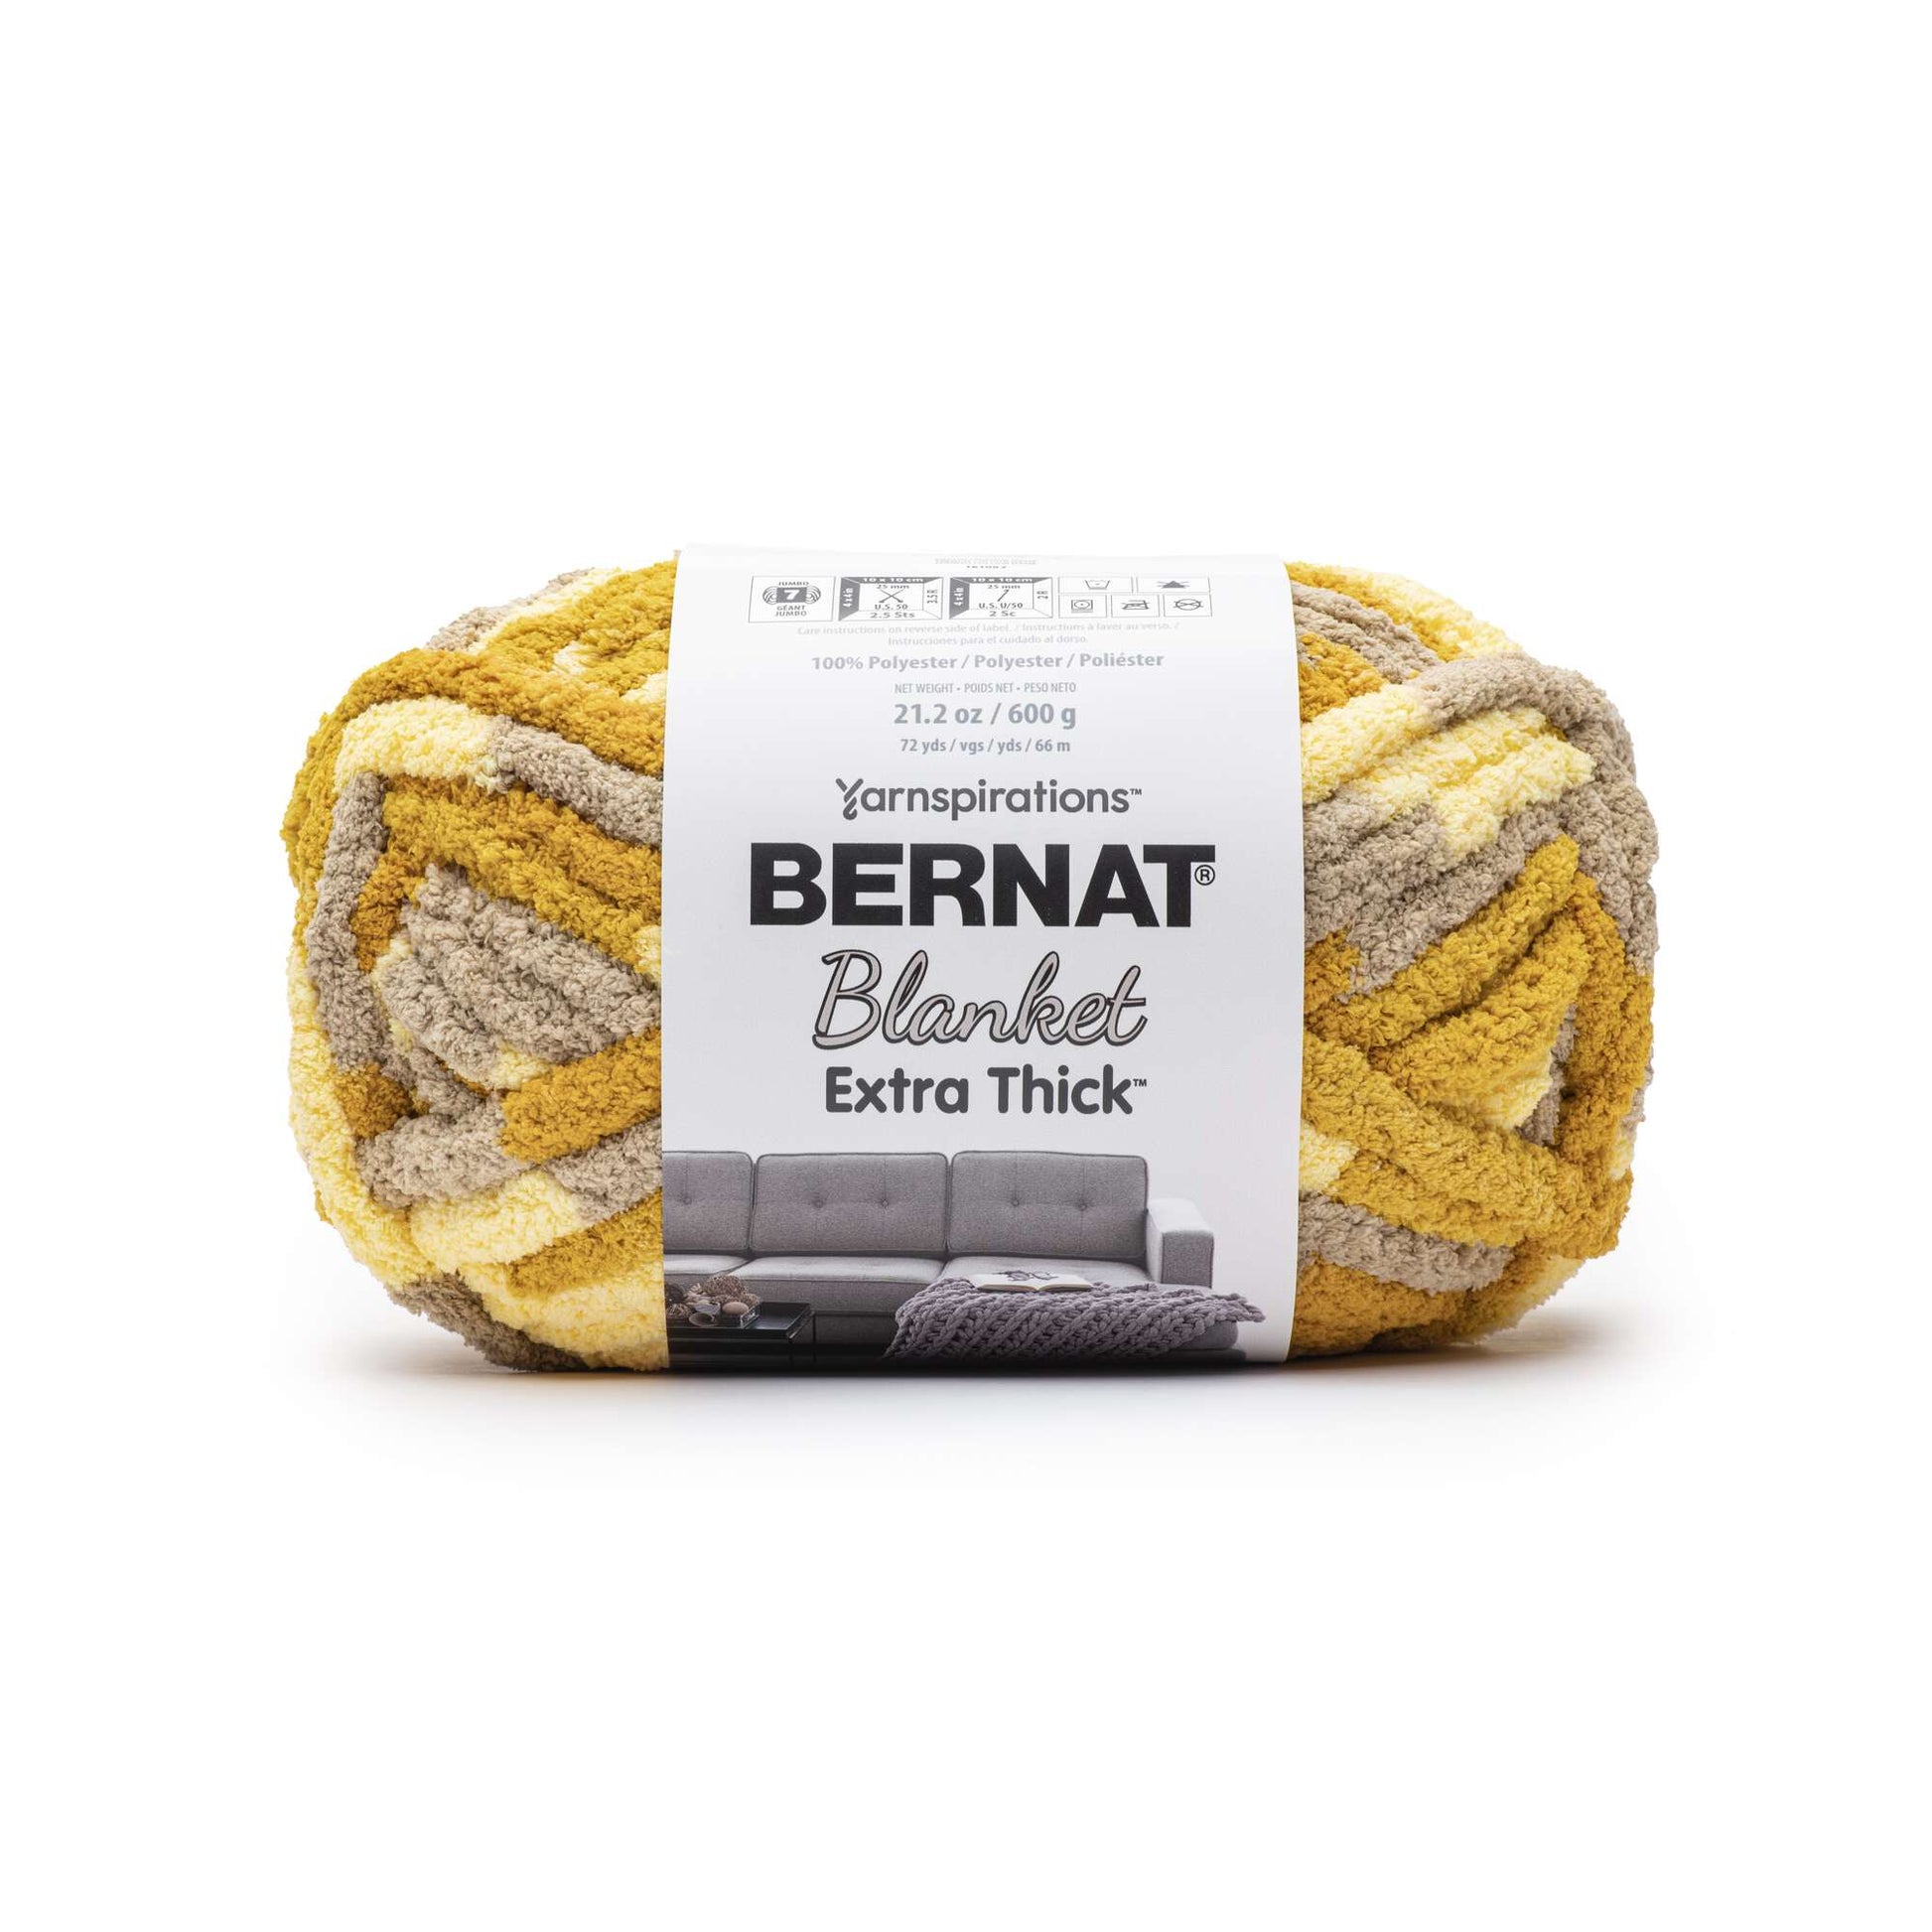 Bernat Blanket Extra Thick Sunset Yarn - 1 Pack of 600g/21oz - Polyester - 7 Jumbo - Knitting, Crocheting, Crafts & Amigurumi, Chunky Chenille Yarn